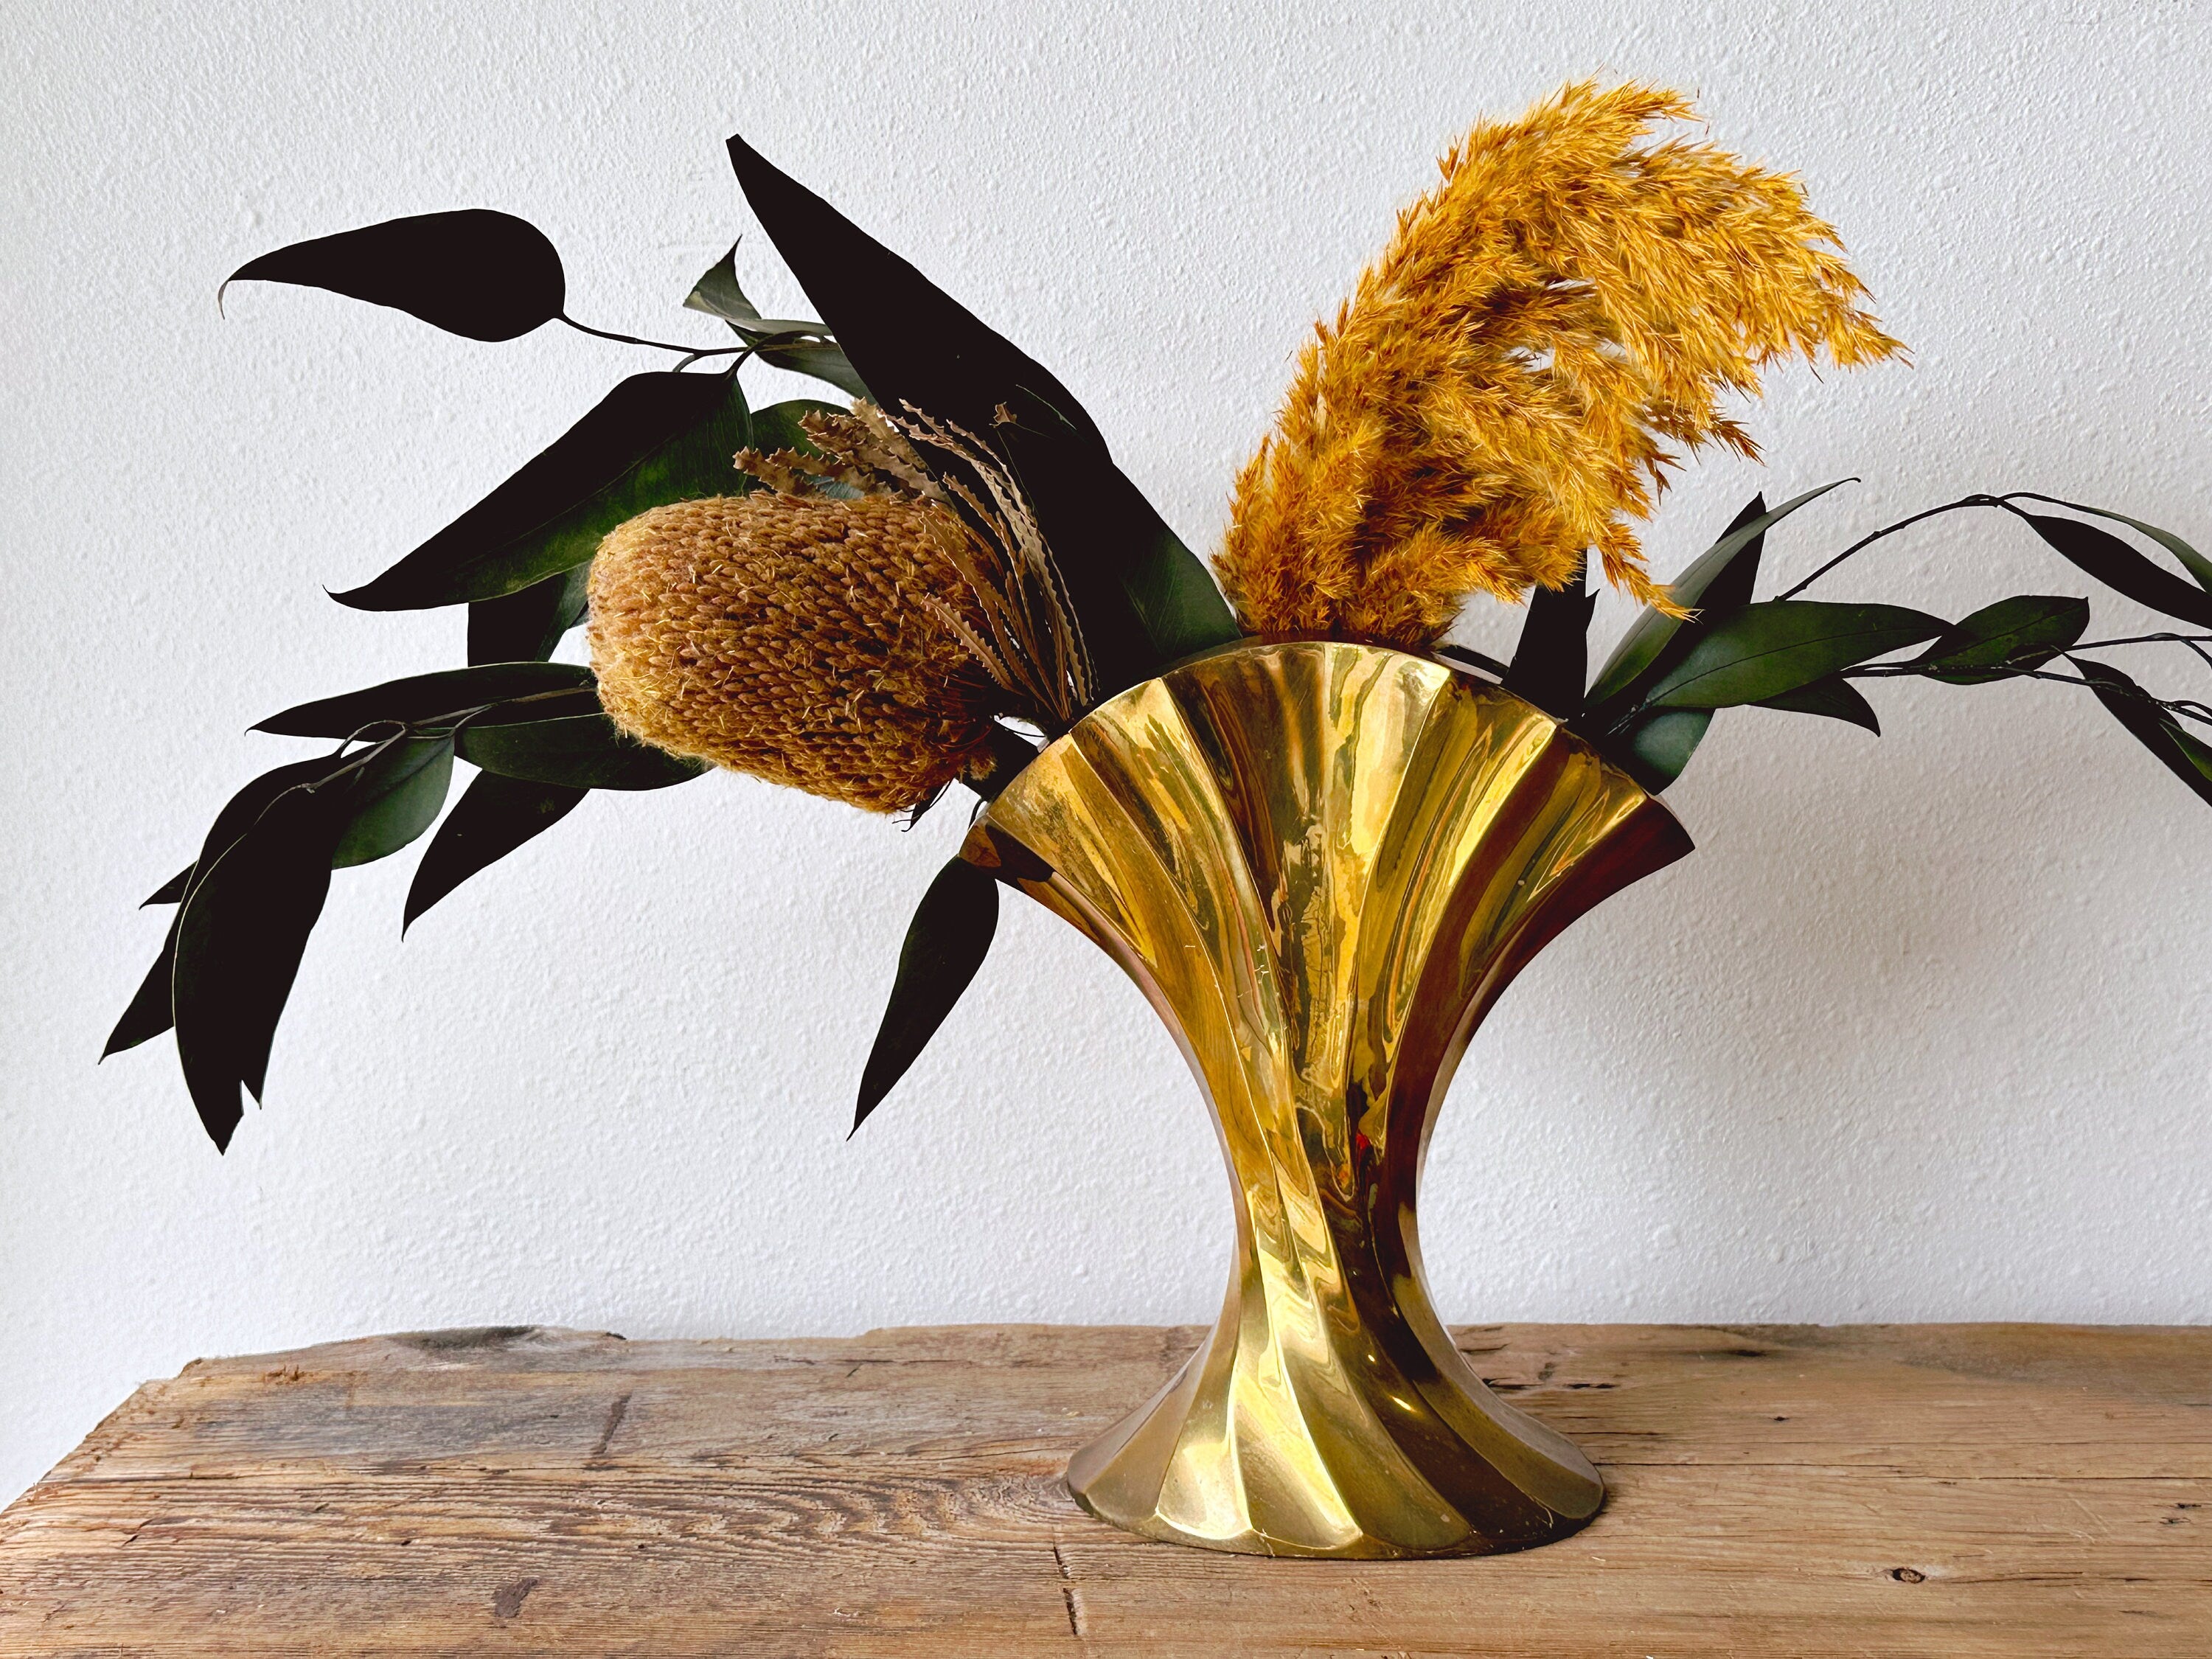 Vintage 1960s Heavy Brass Twist Fan Flower Vase | Mid Century Modern Display Made in India | Art Deco Style Home Decor | Housewarming Gift